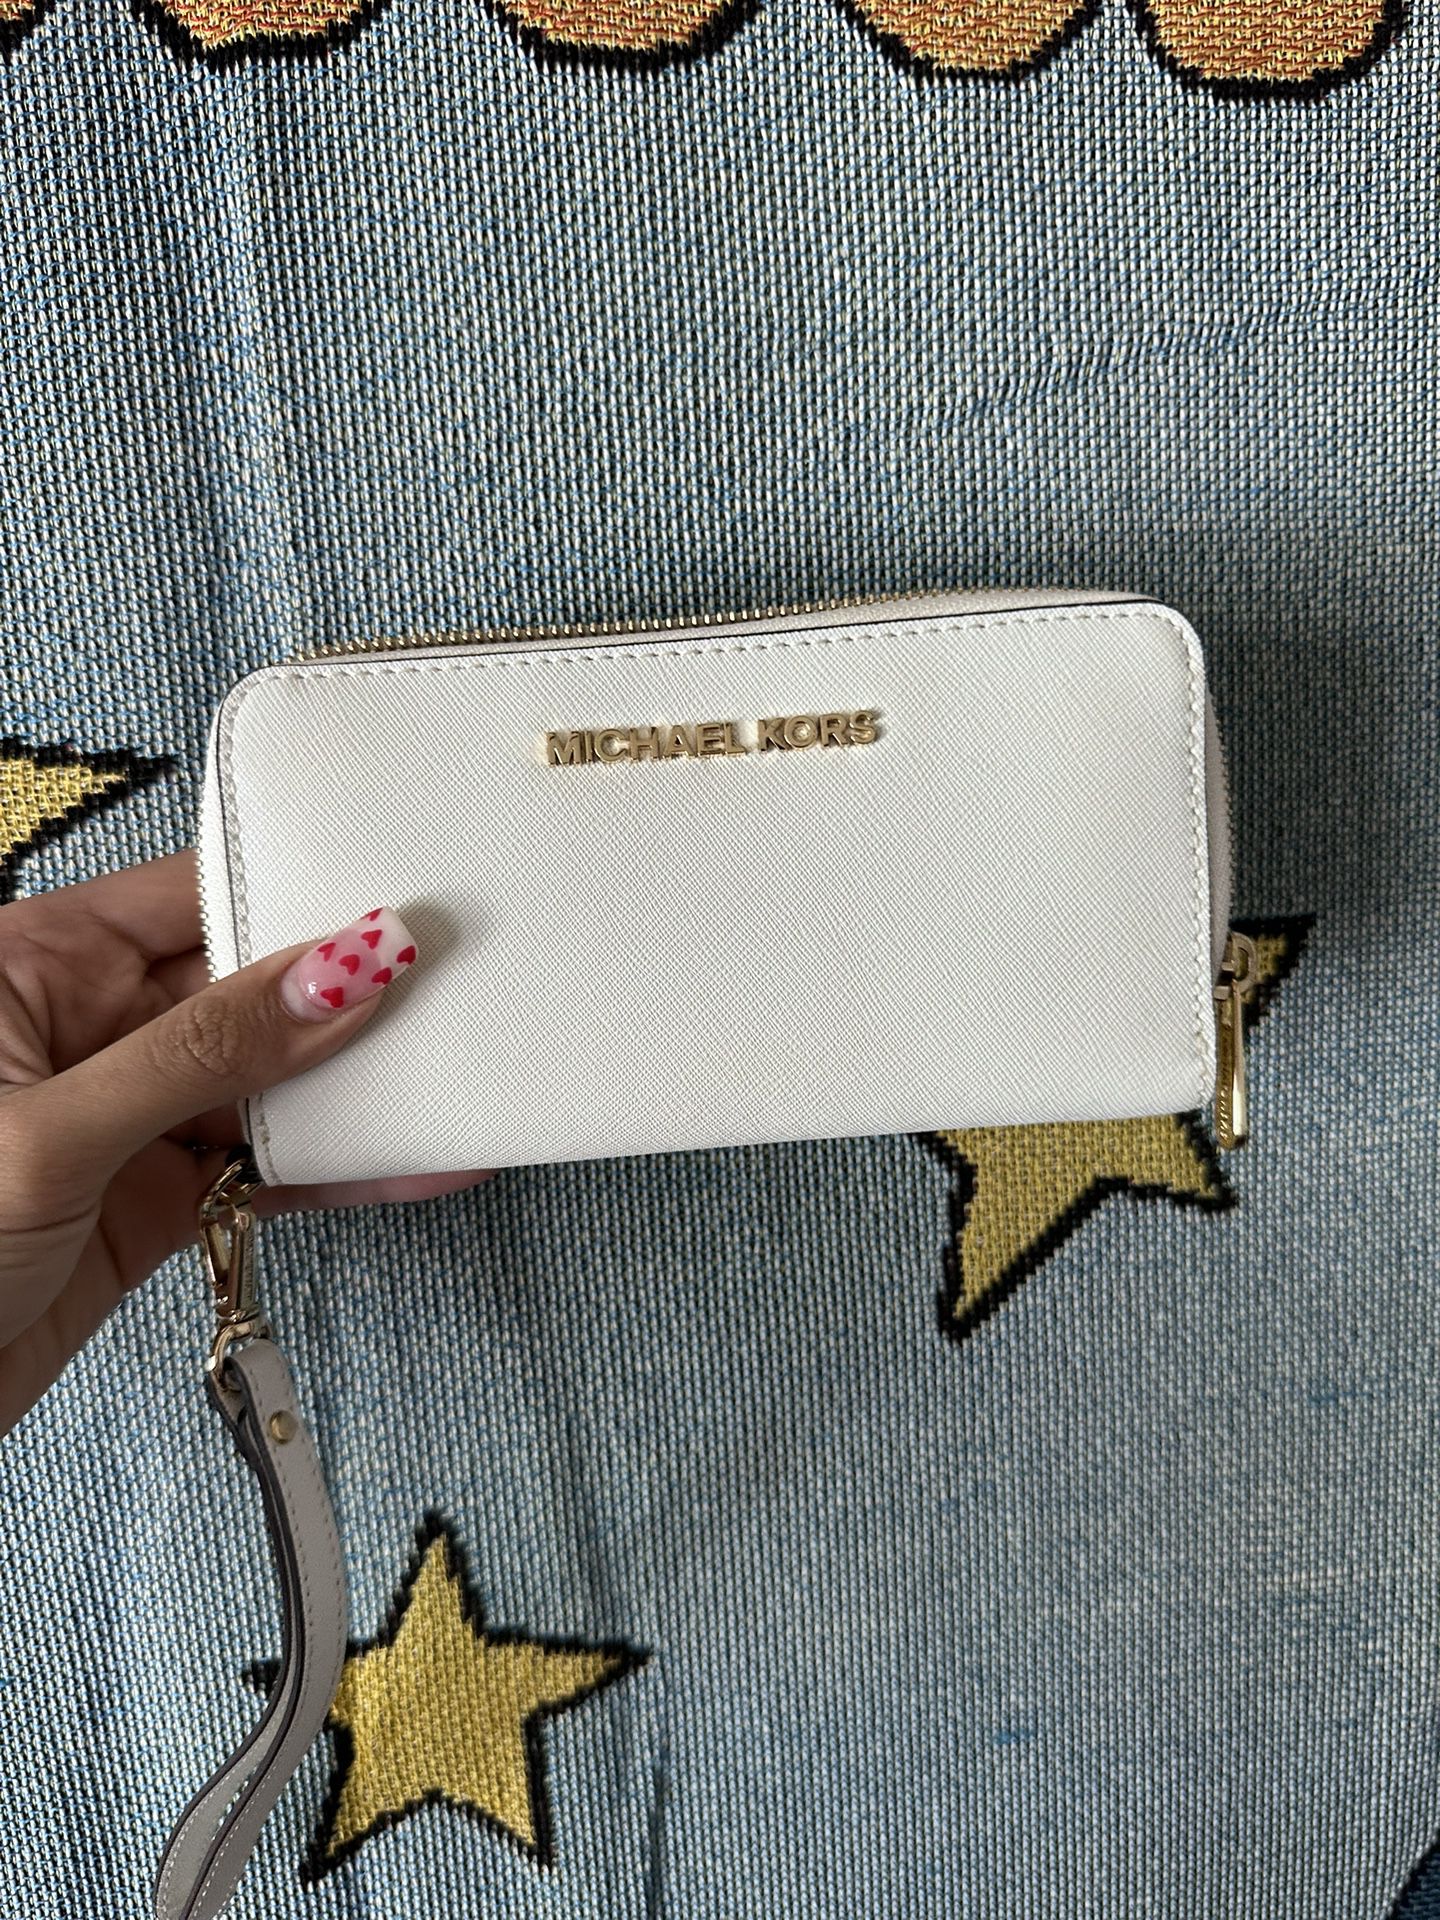 Michael Kors Leather Wallet White 